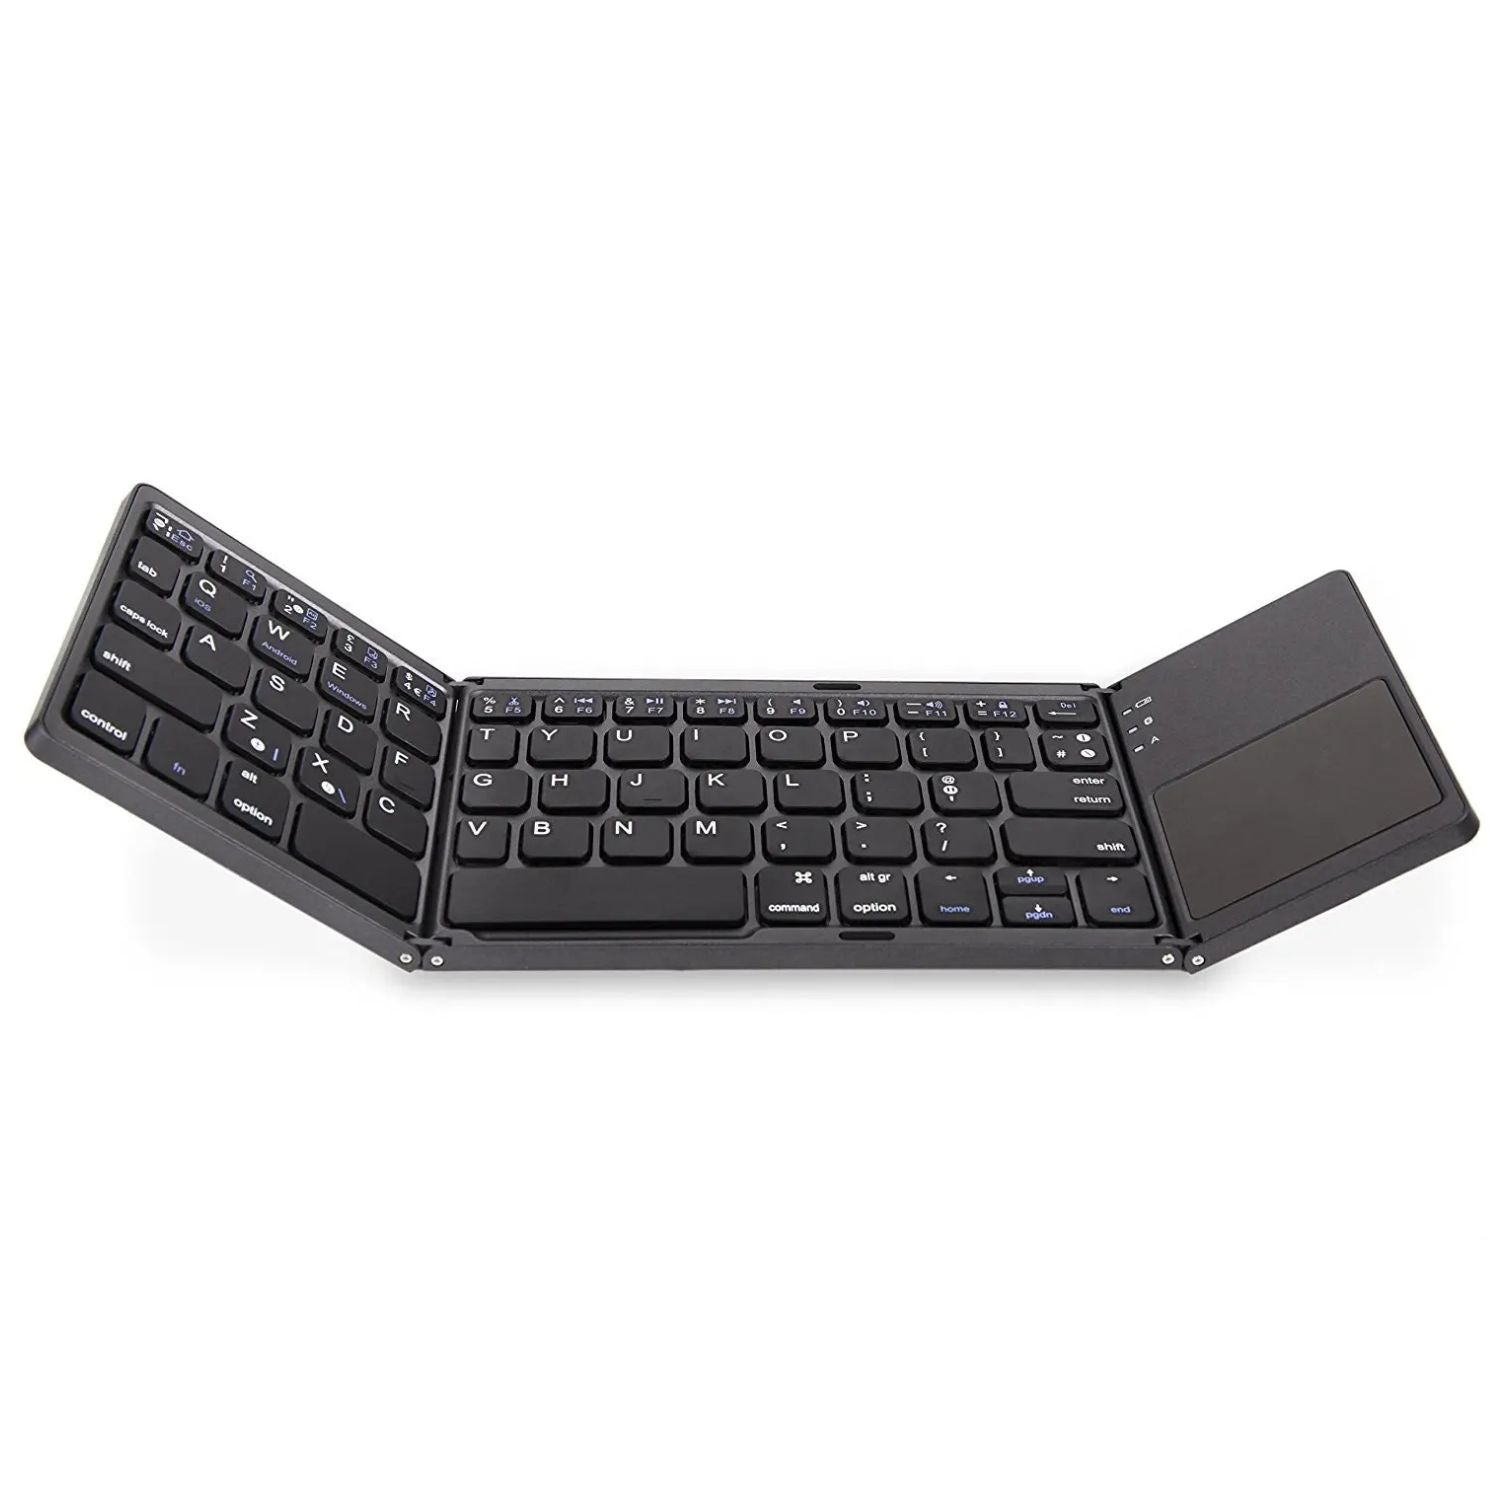 Mini Folding Bluetooth Keyboard